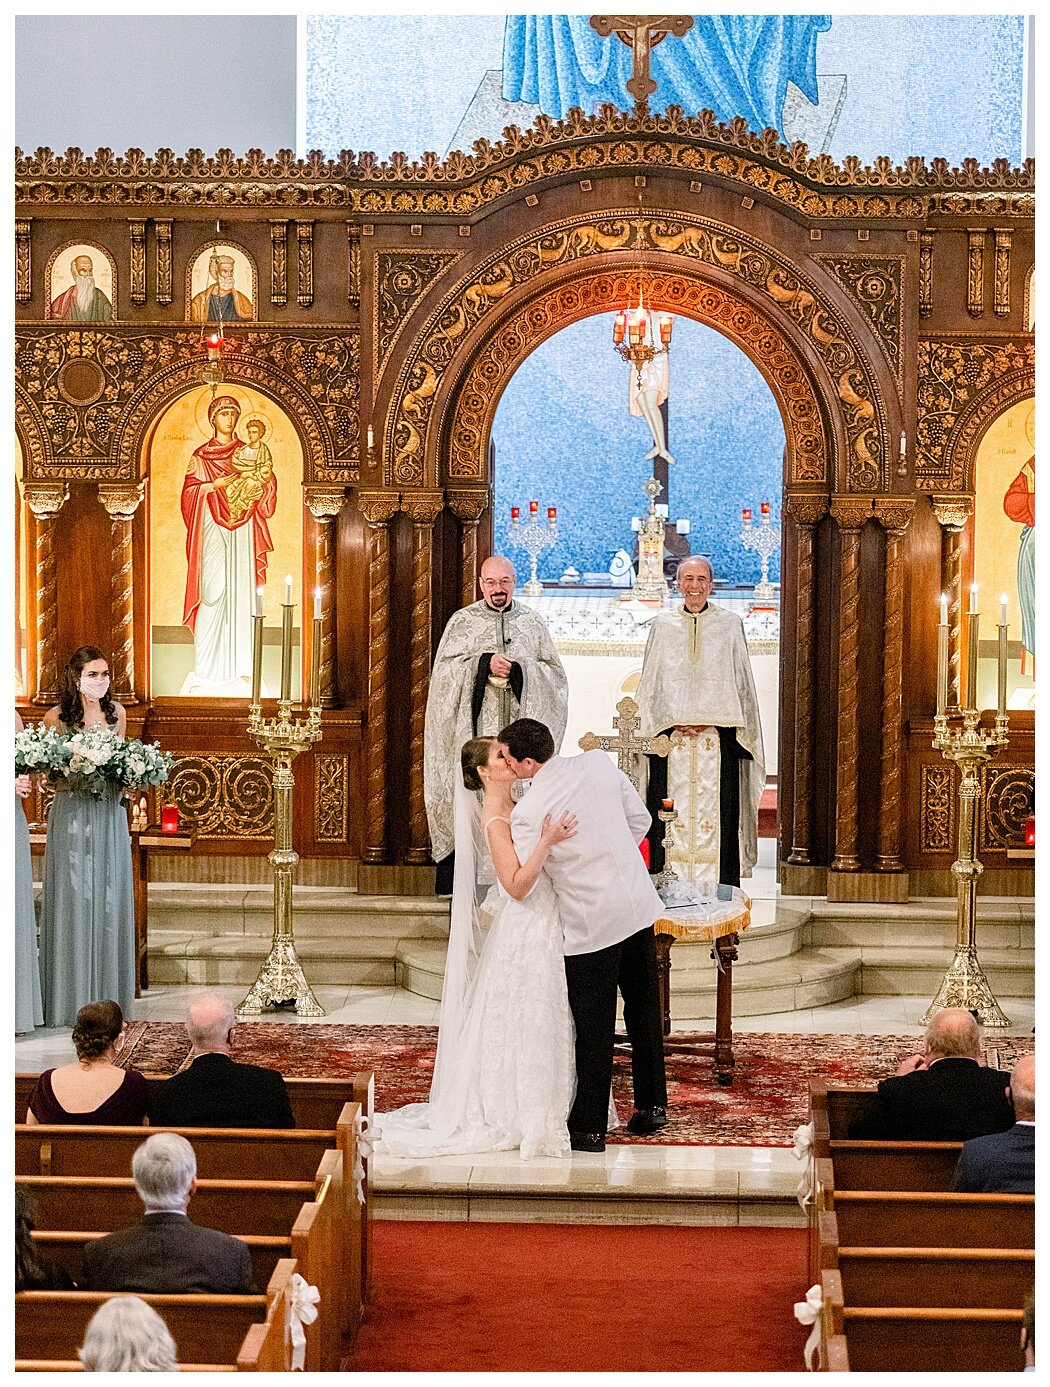 Saints-helen-and-constantine-greek-orthodox-cathedral-wedding-richmond_1333.jpg